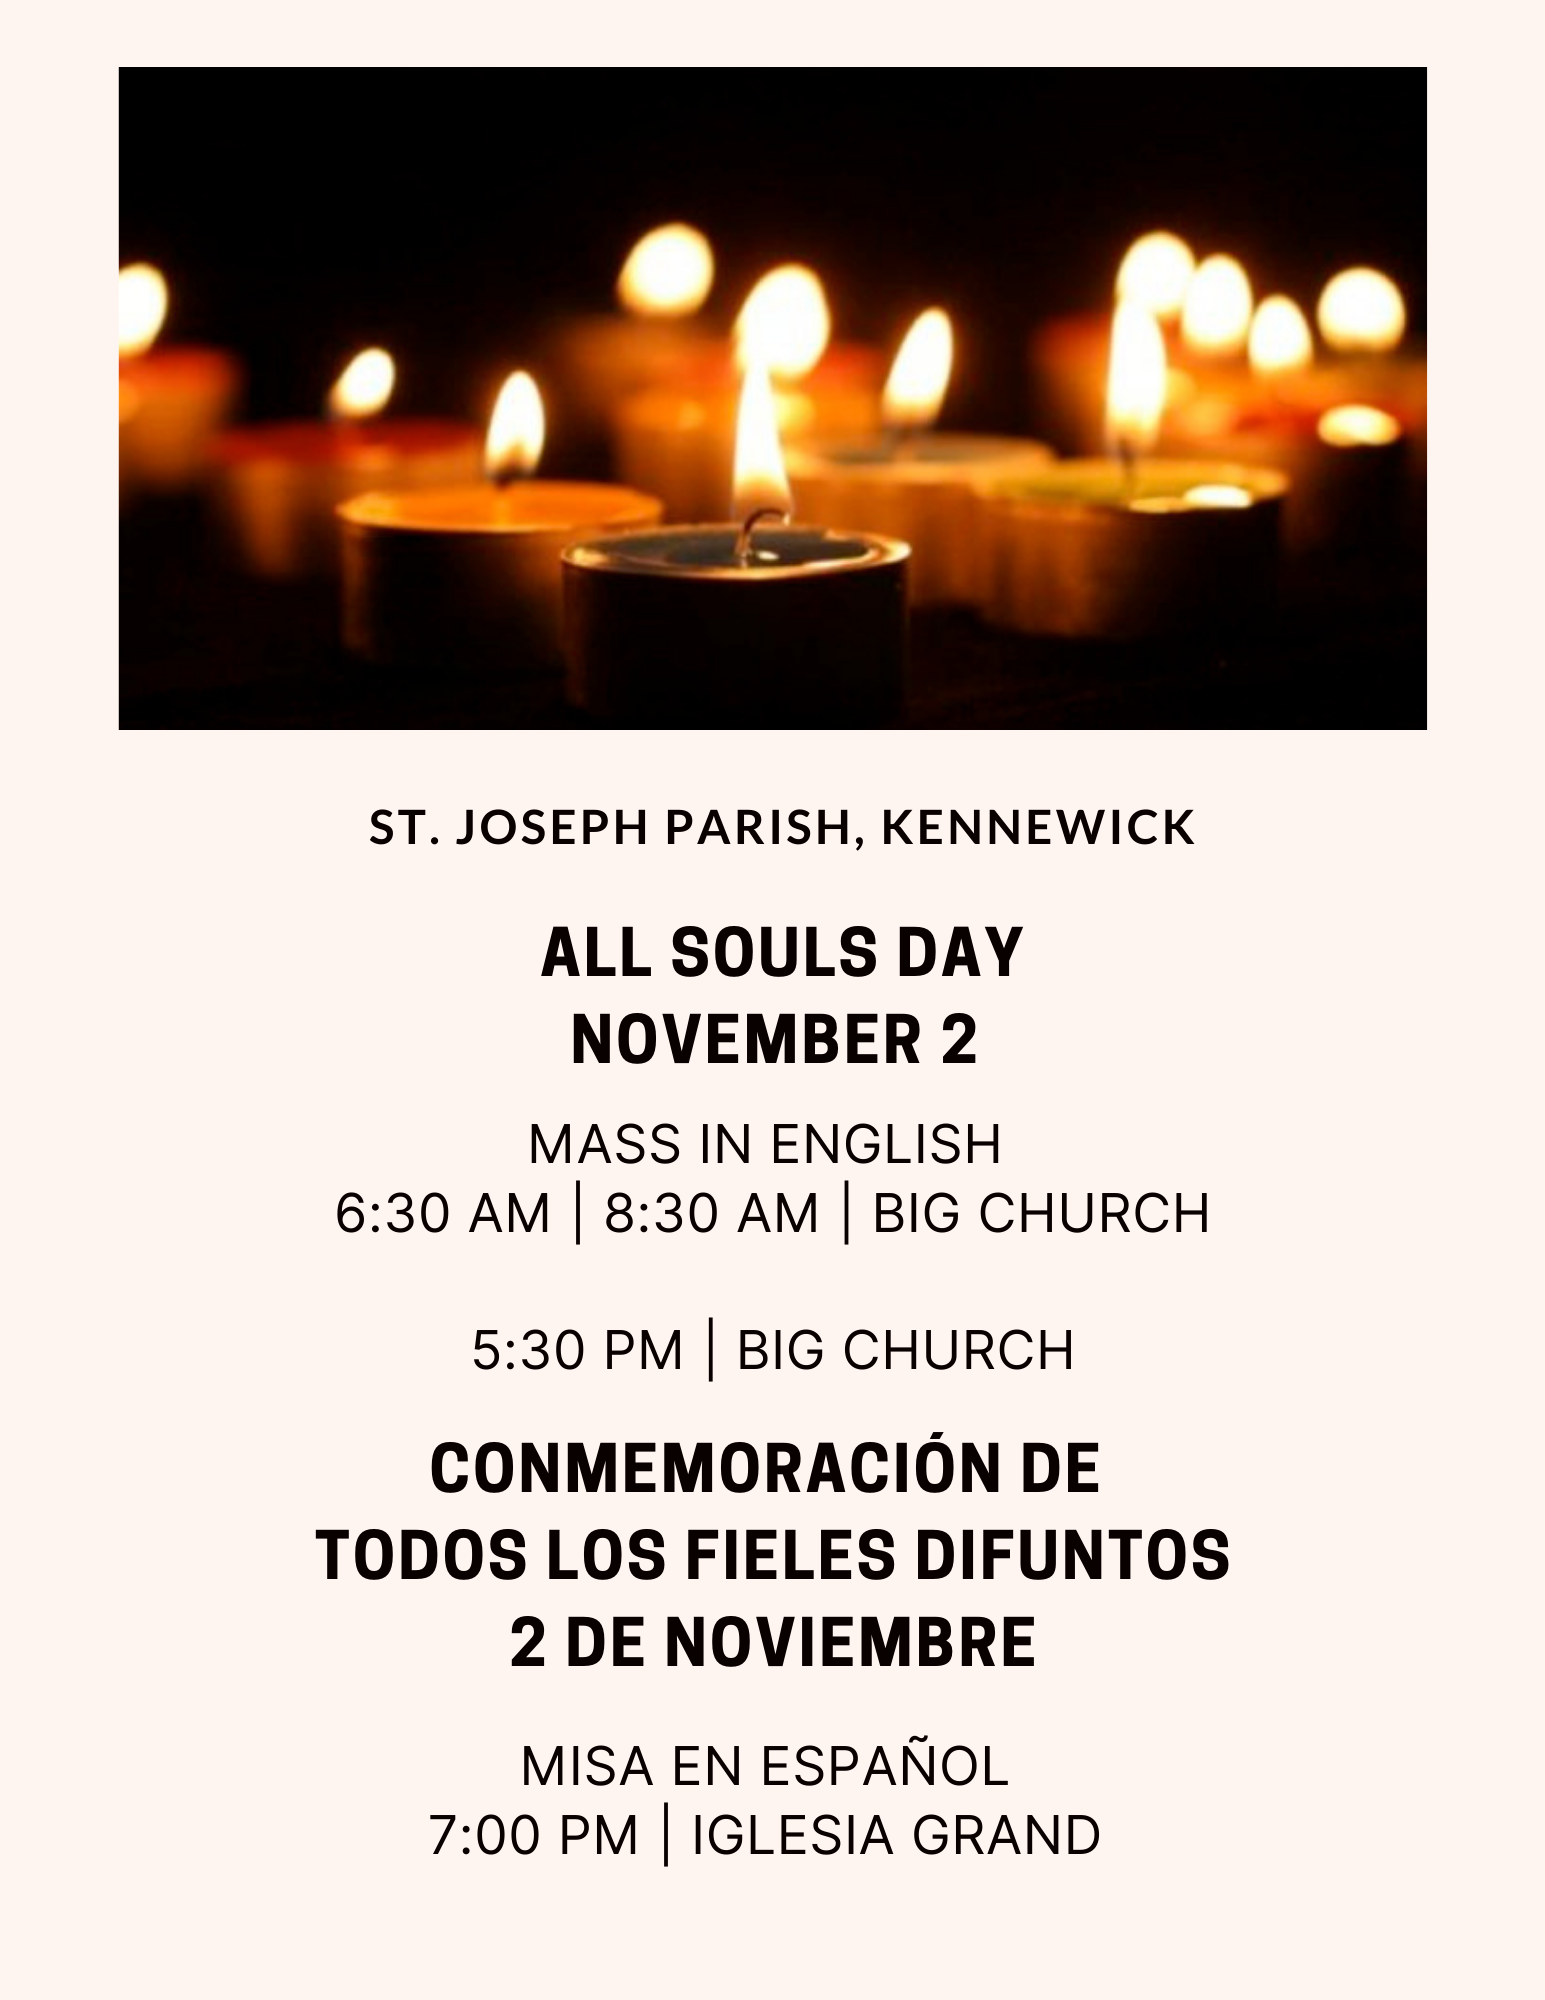 all-souls-day-nov-2-st-joseph-parish-kennewick-wa